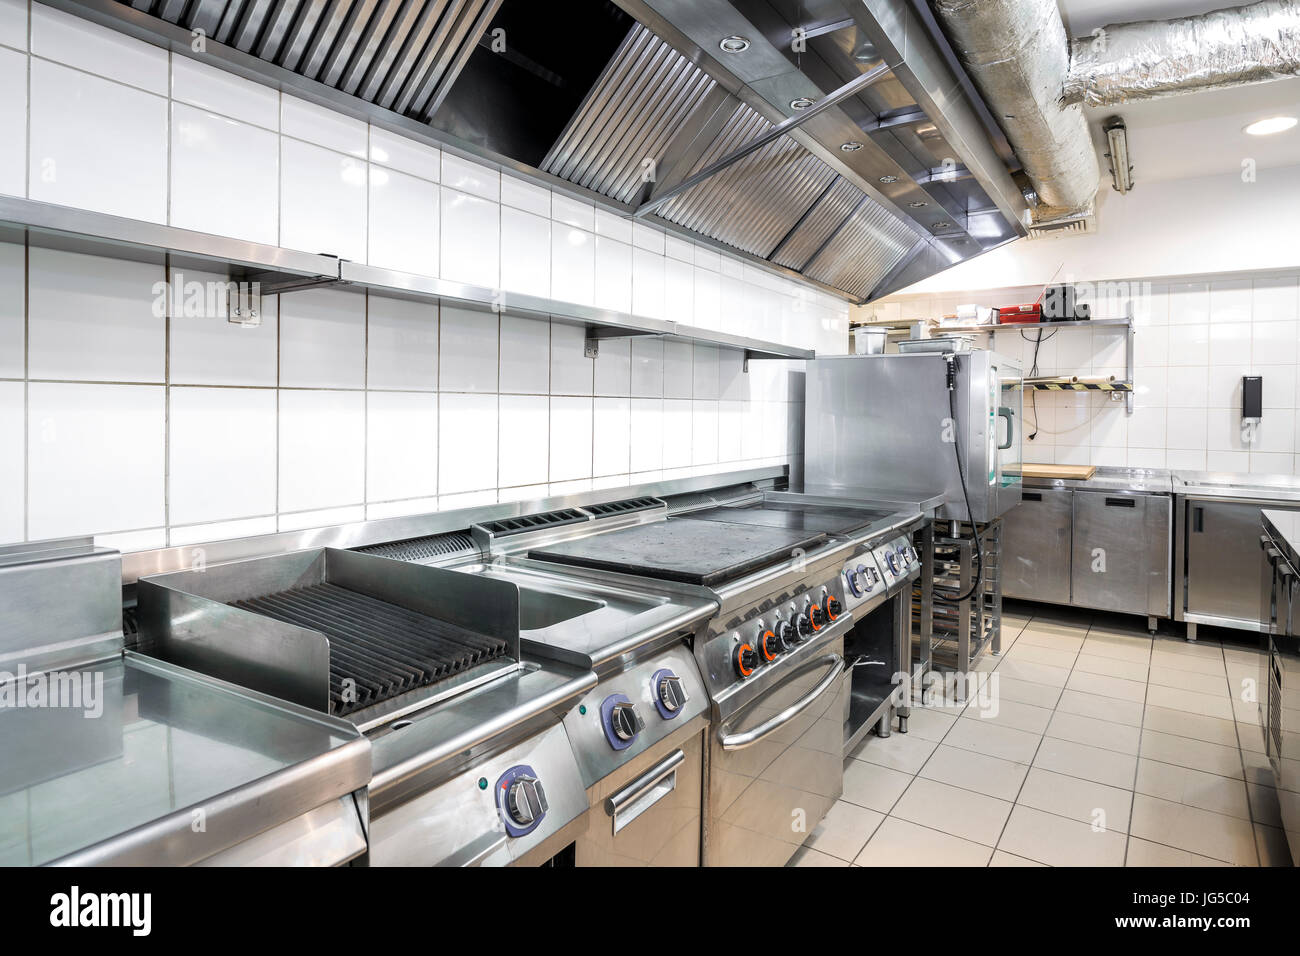 https://c8.alamy.com/comp/JG5C04/modern-kitchen-in-the-restaurant-with-stainless-equipment-JG5C04.jpg